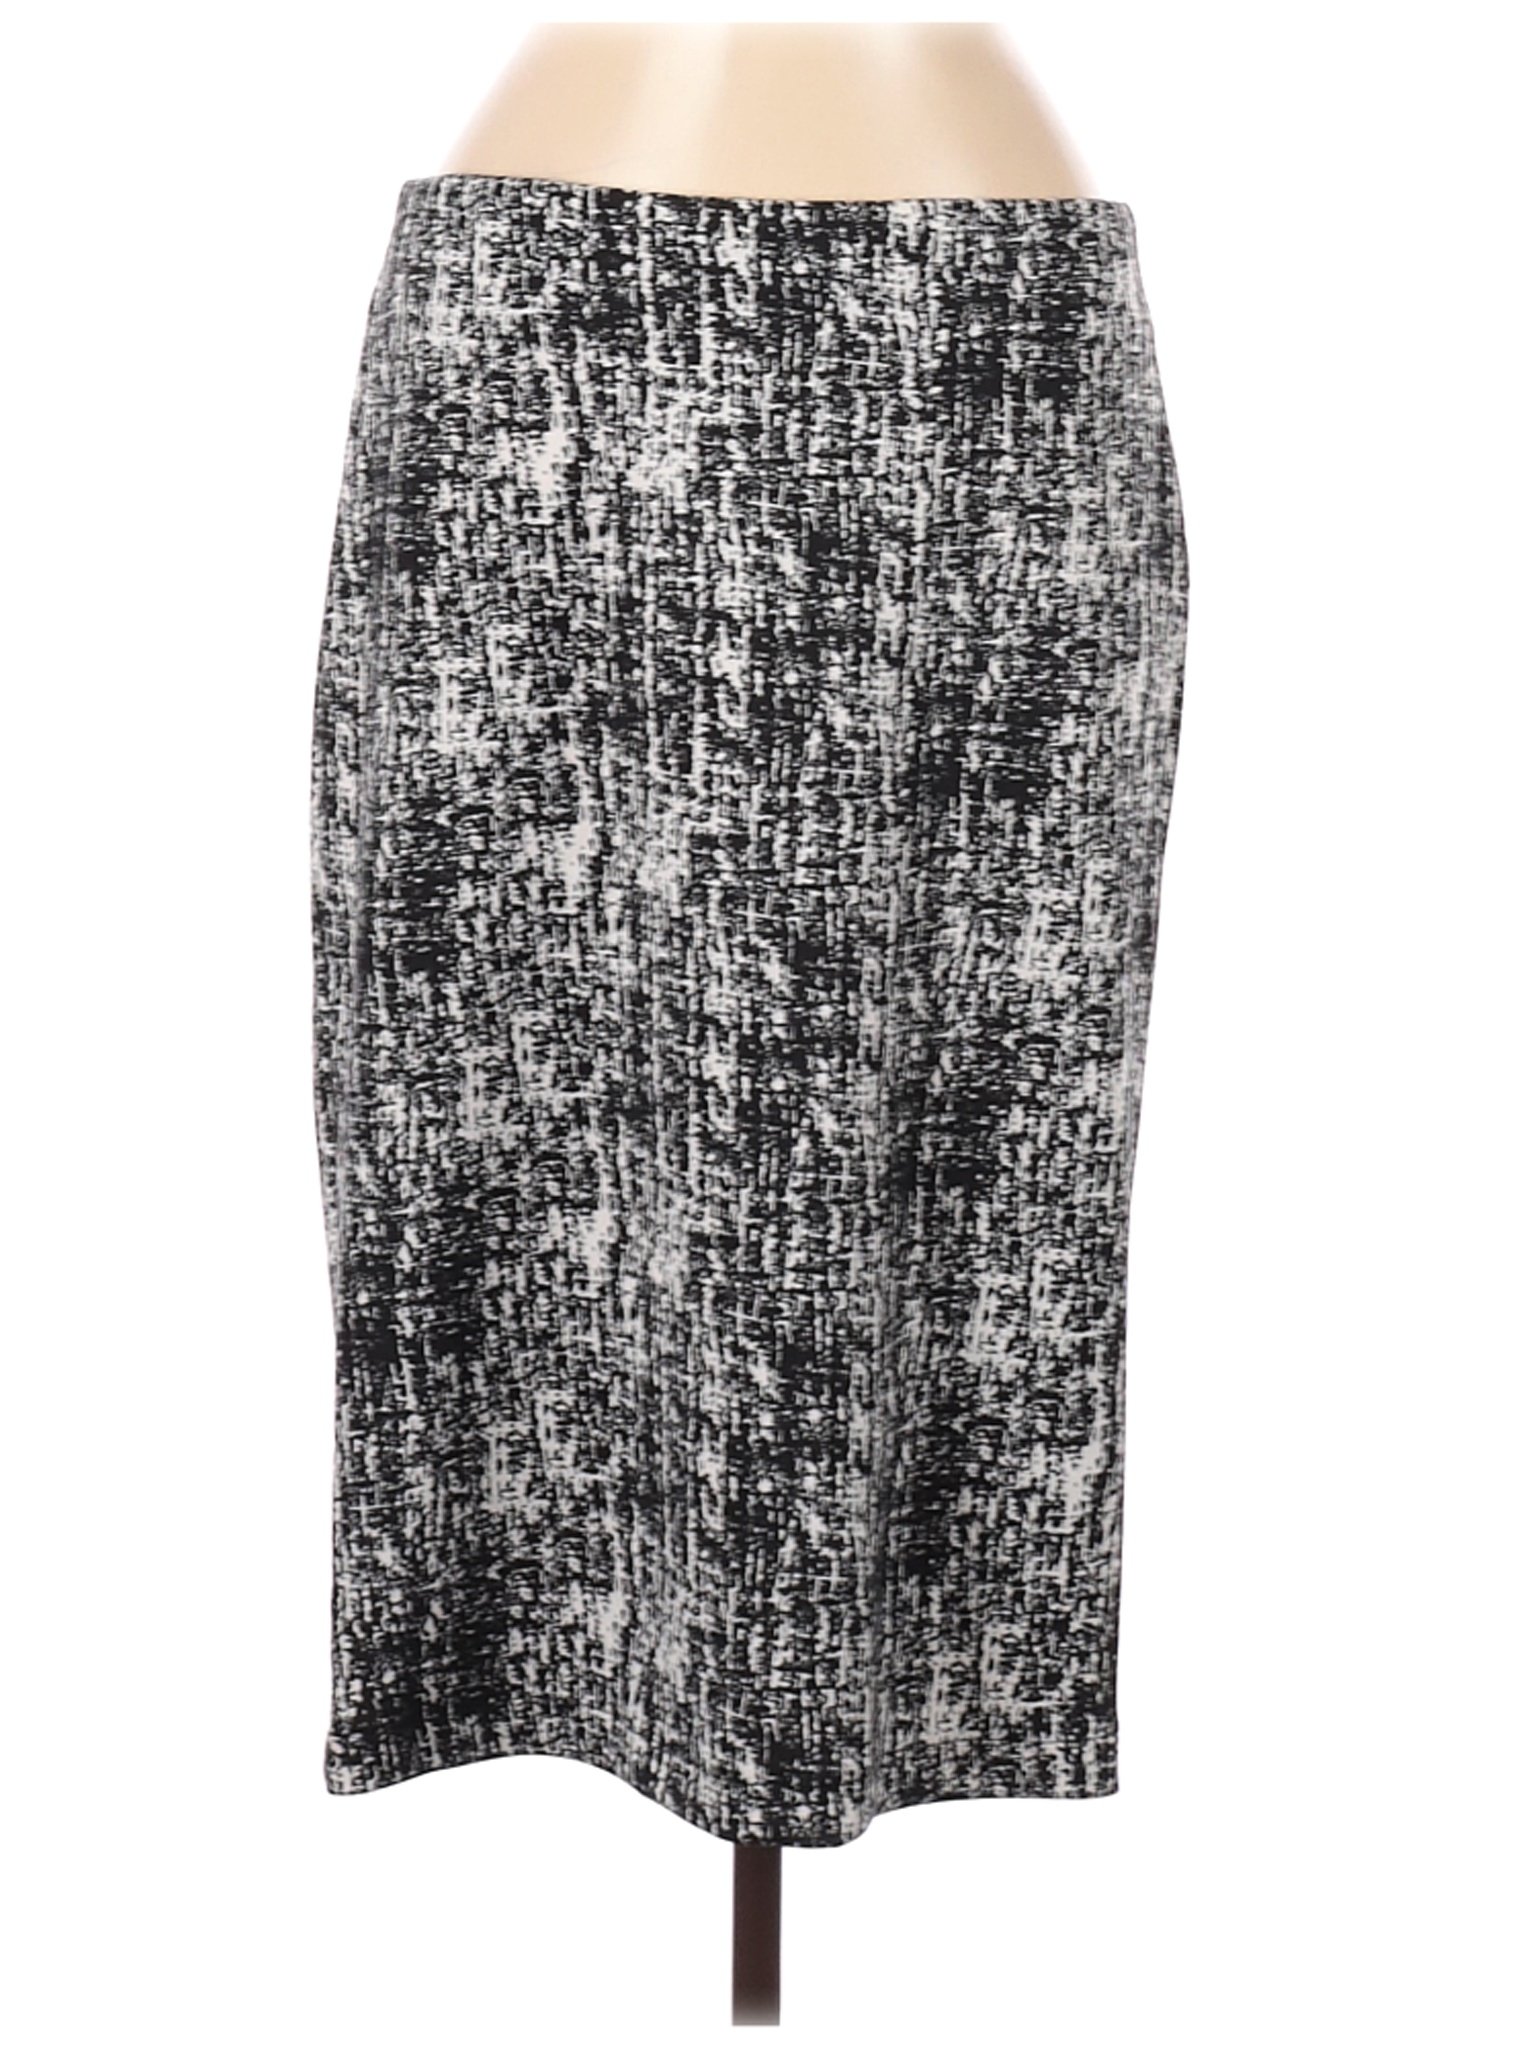 Vince Camuto Women Black Casual Skirt M | eBay